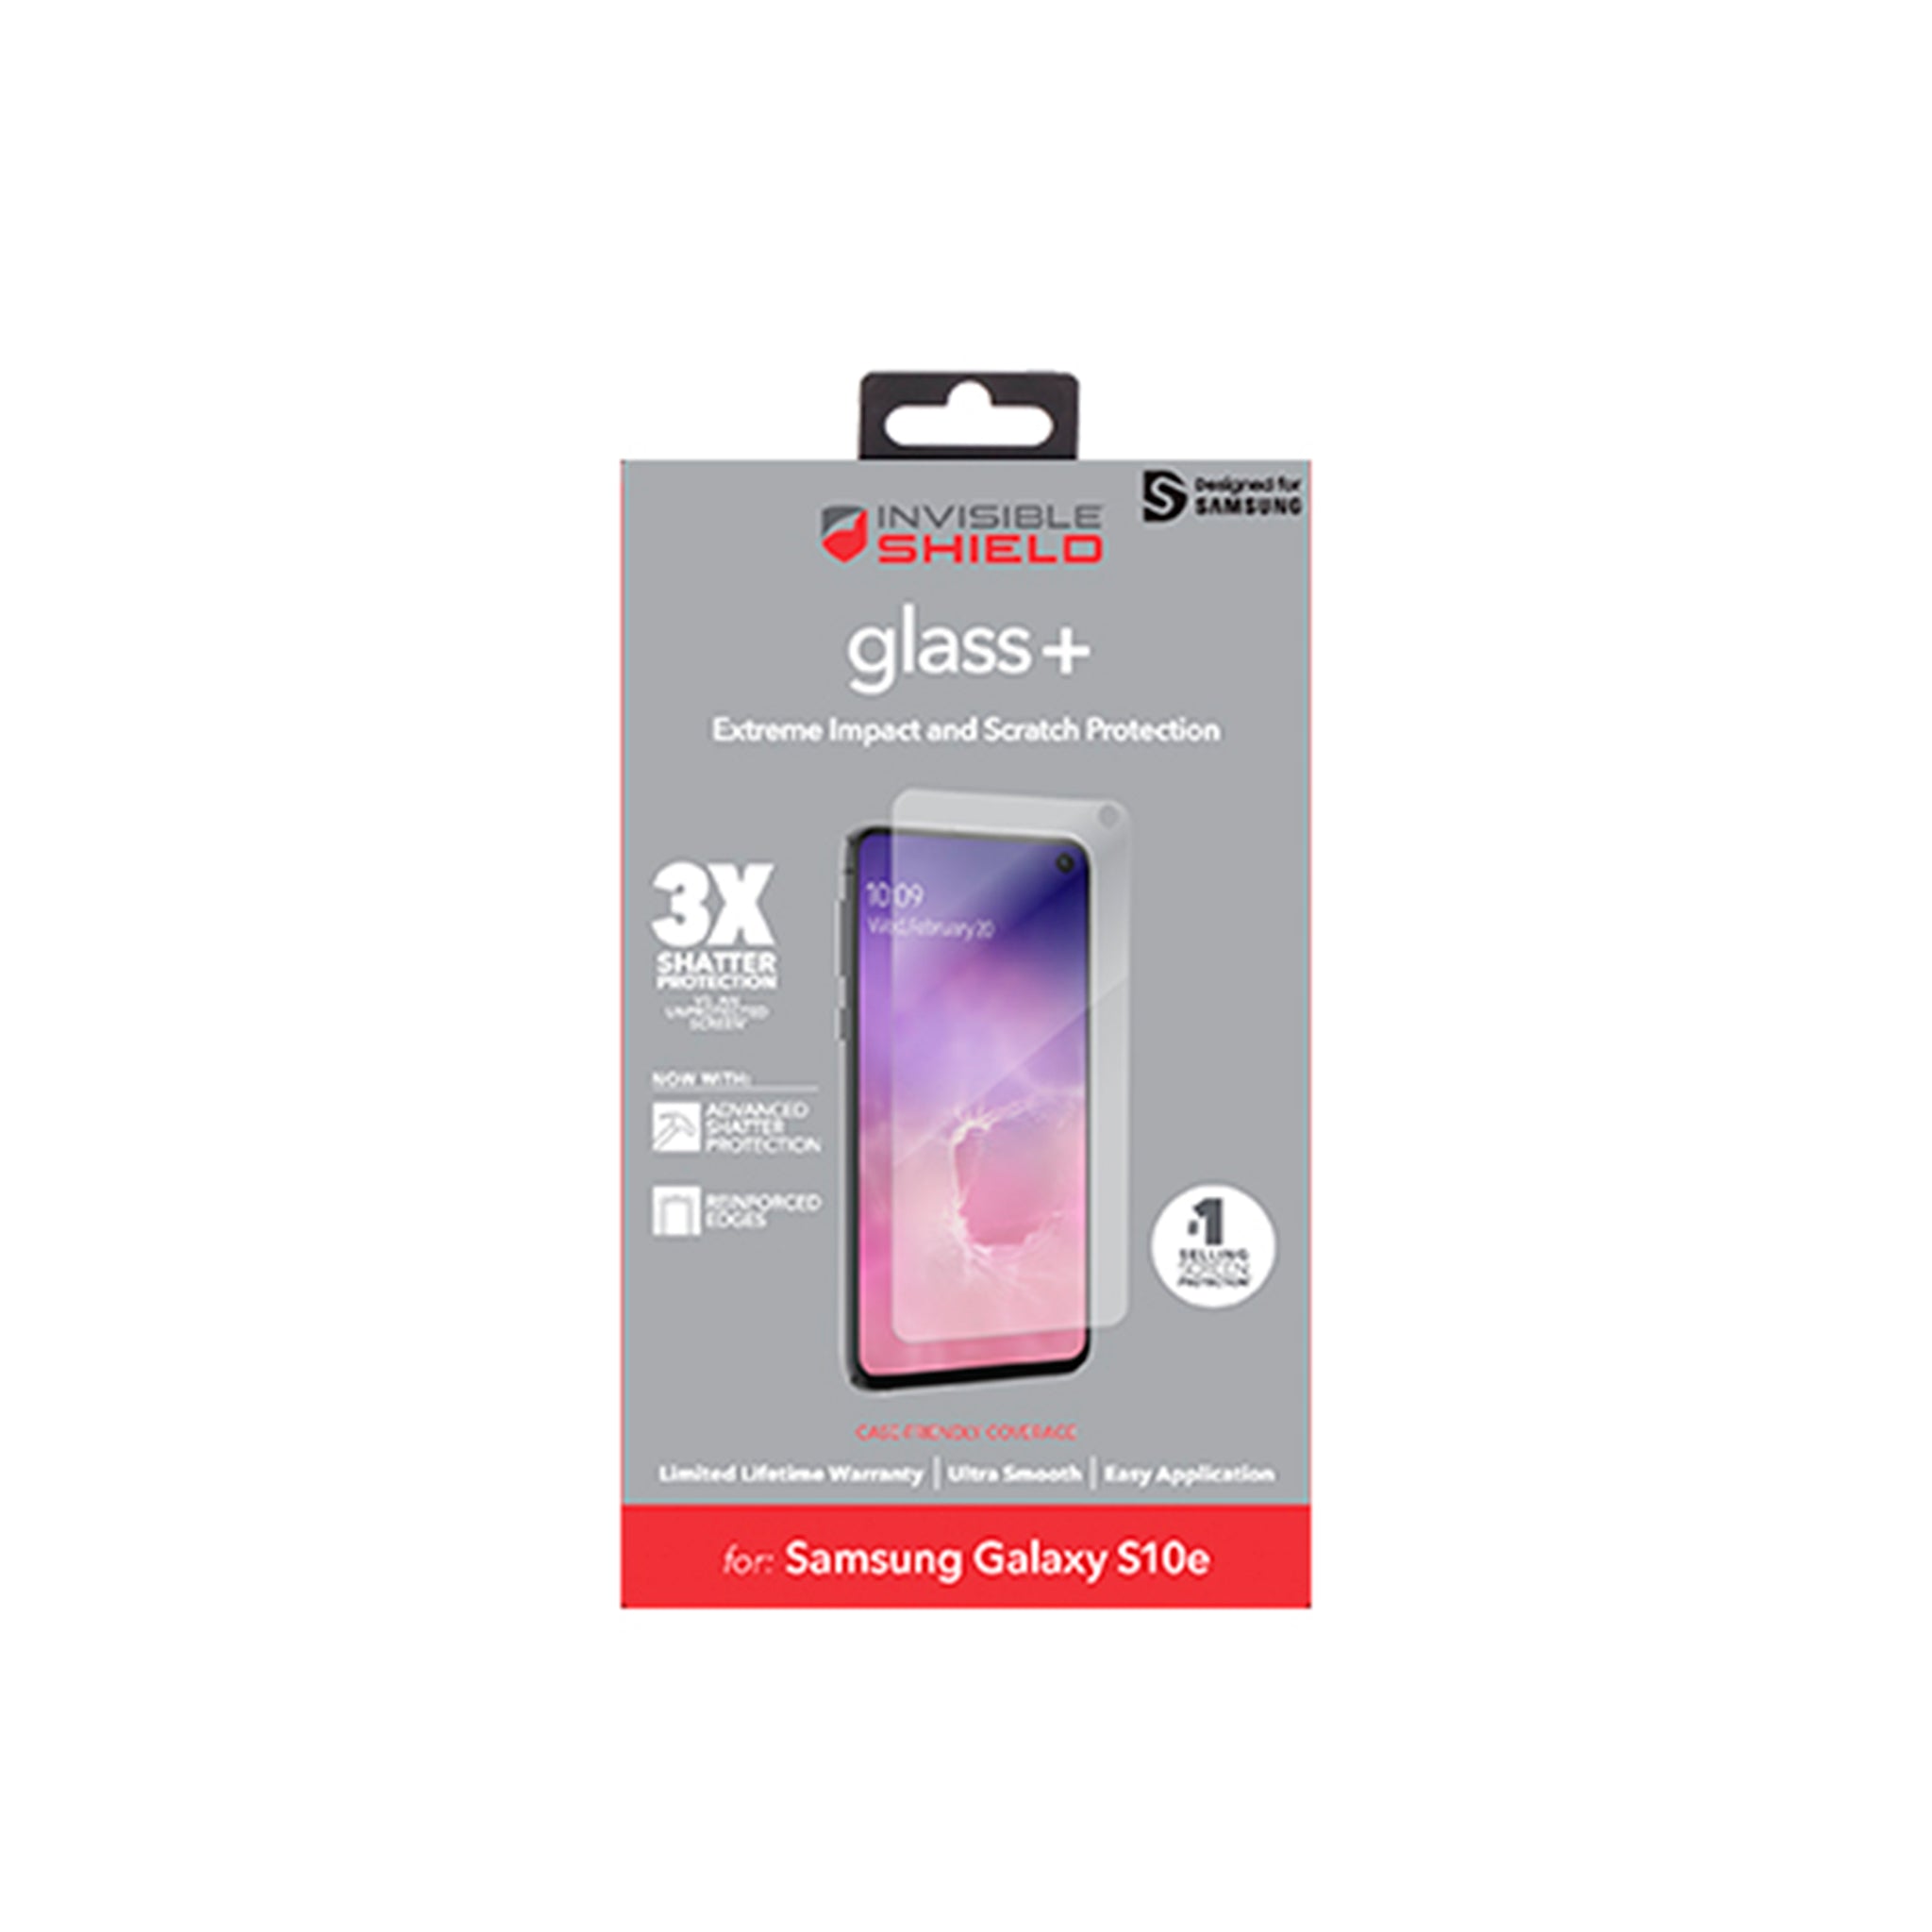 Zagg - Invisibleshield Glass Plus Glass Screen Protector For Samsung Galaxy S10e - Clear